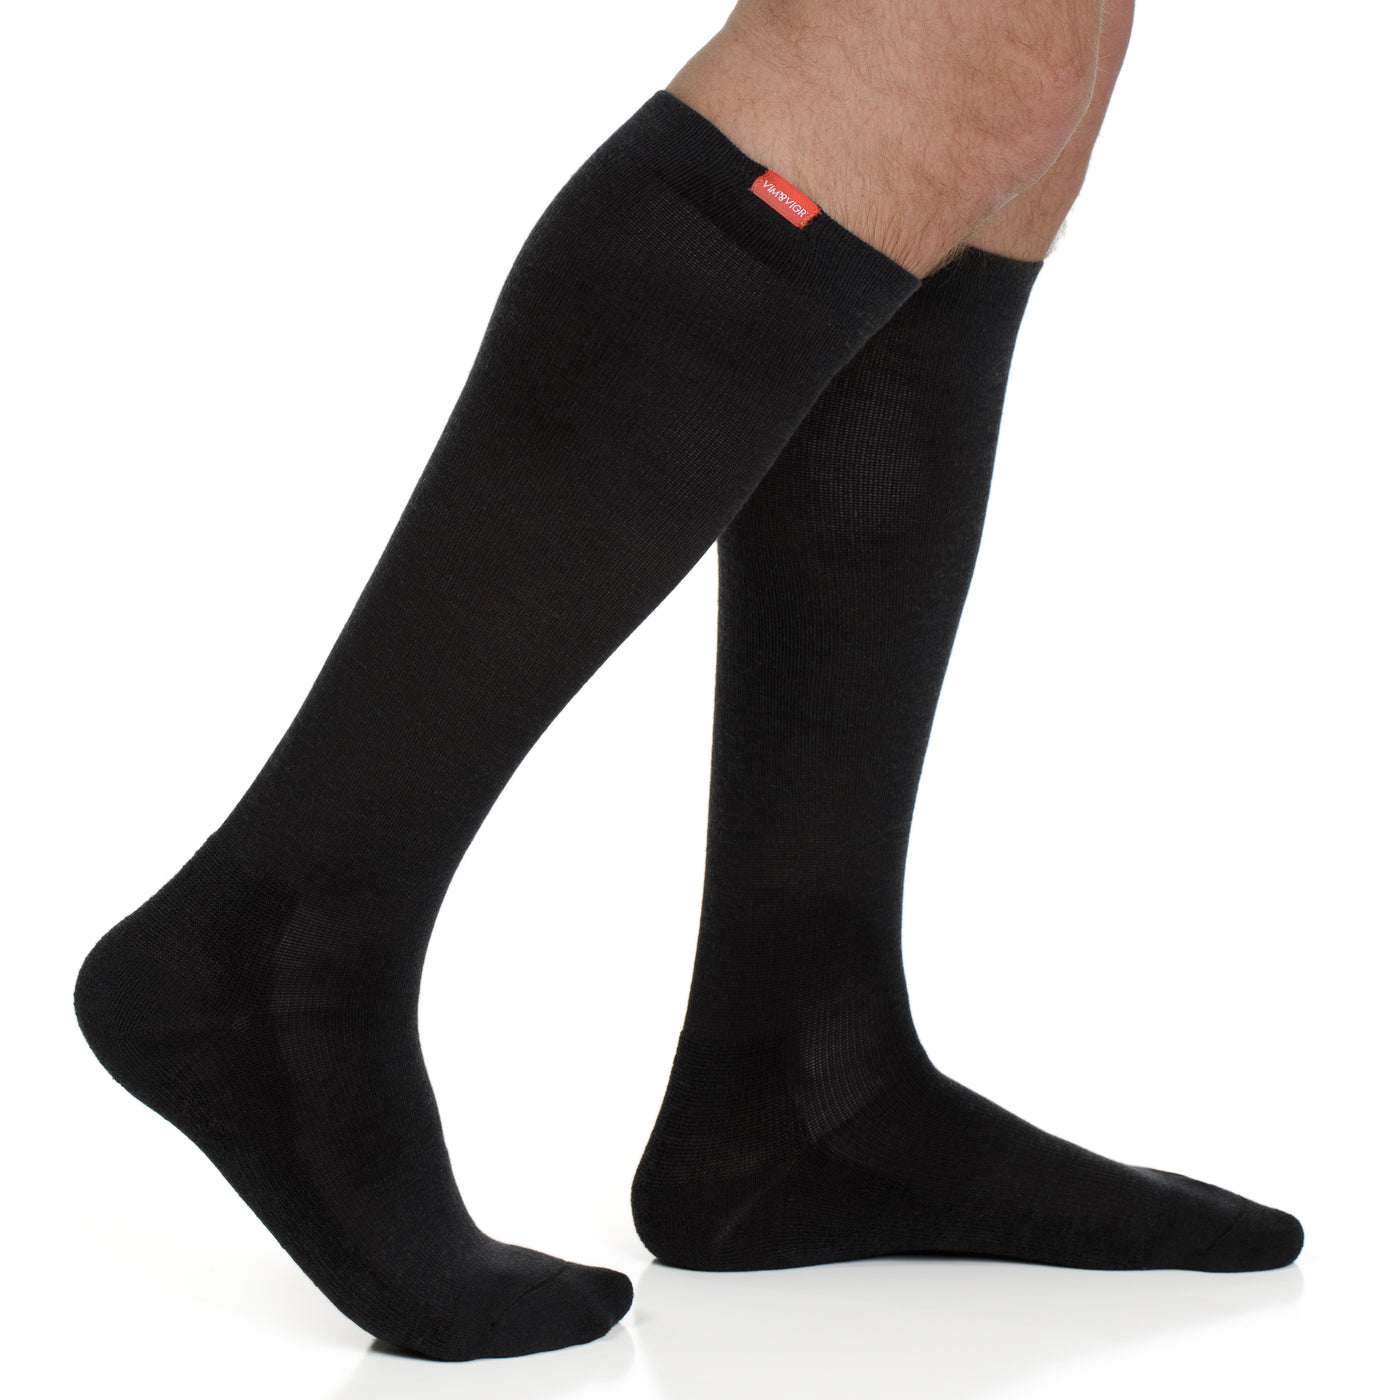 30-40 mmHg: Solid Black (Moisture-wick Nylon) Compression Socks